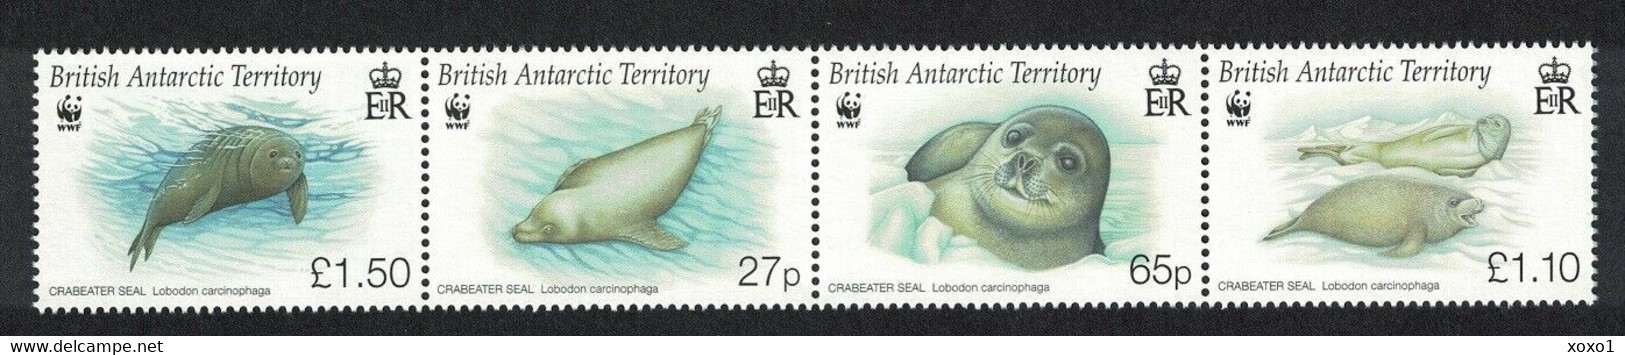 British Antarctic Territory (BAT) 2009 MiNr. 505 - 508 WWF Marine Life Crabeater Seal 4v  MNH**  20.00 € - Unused Stamps